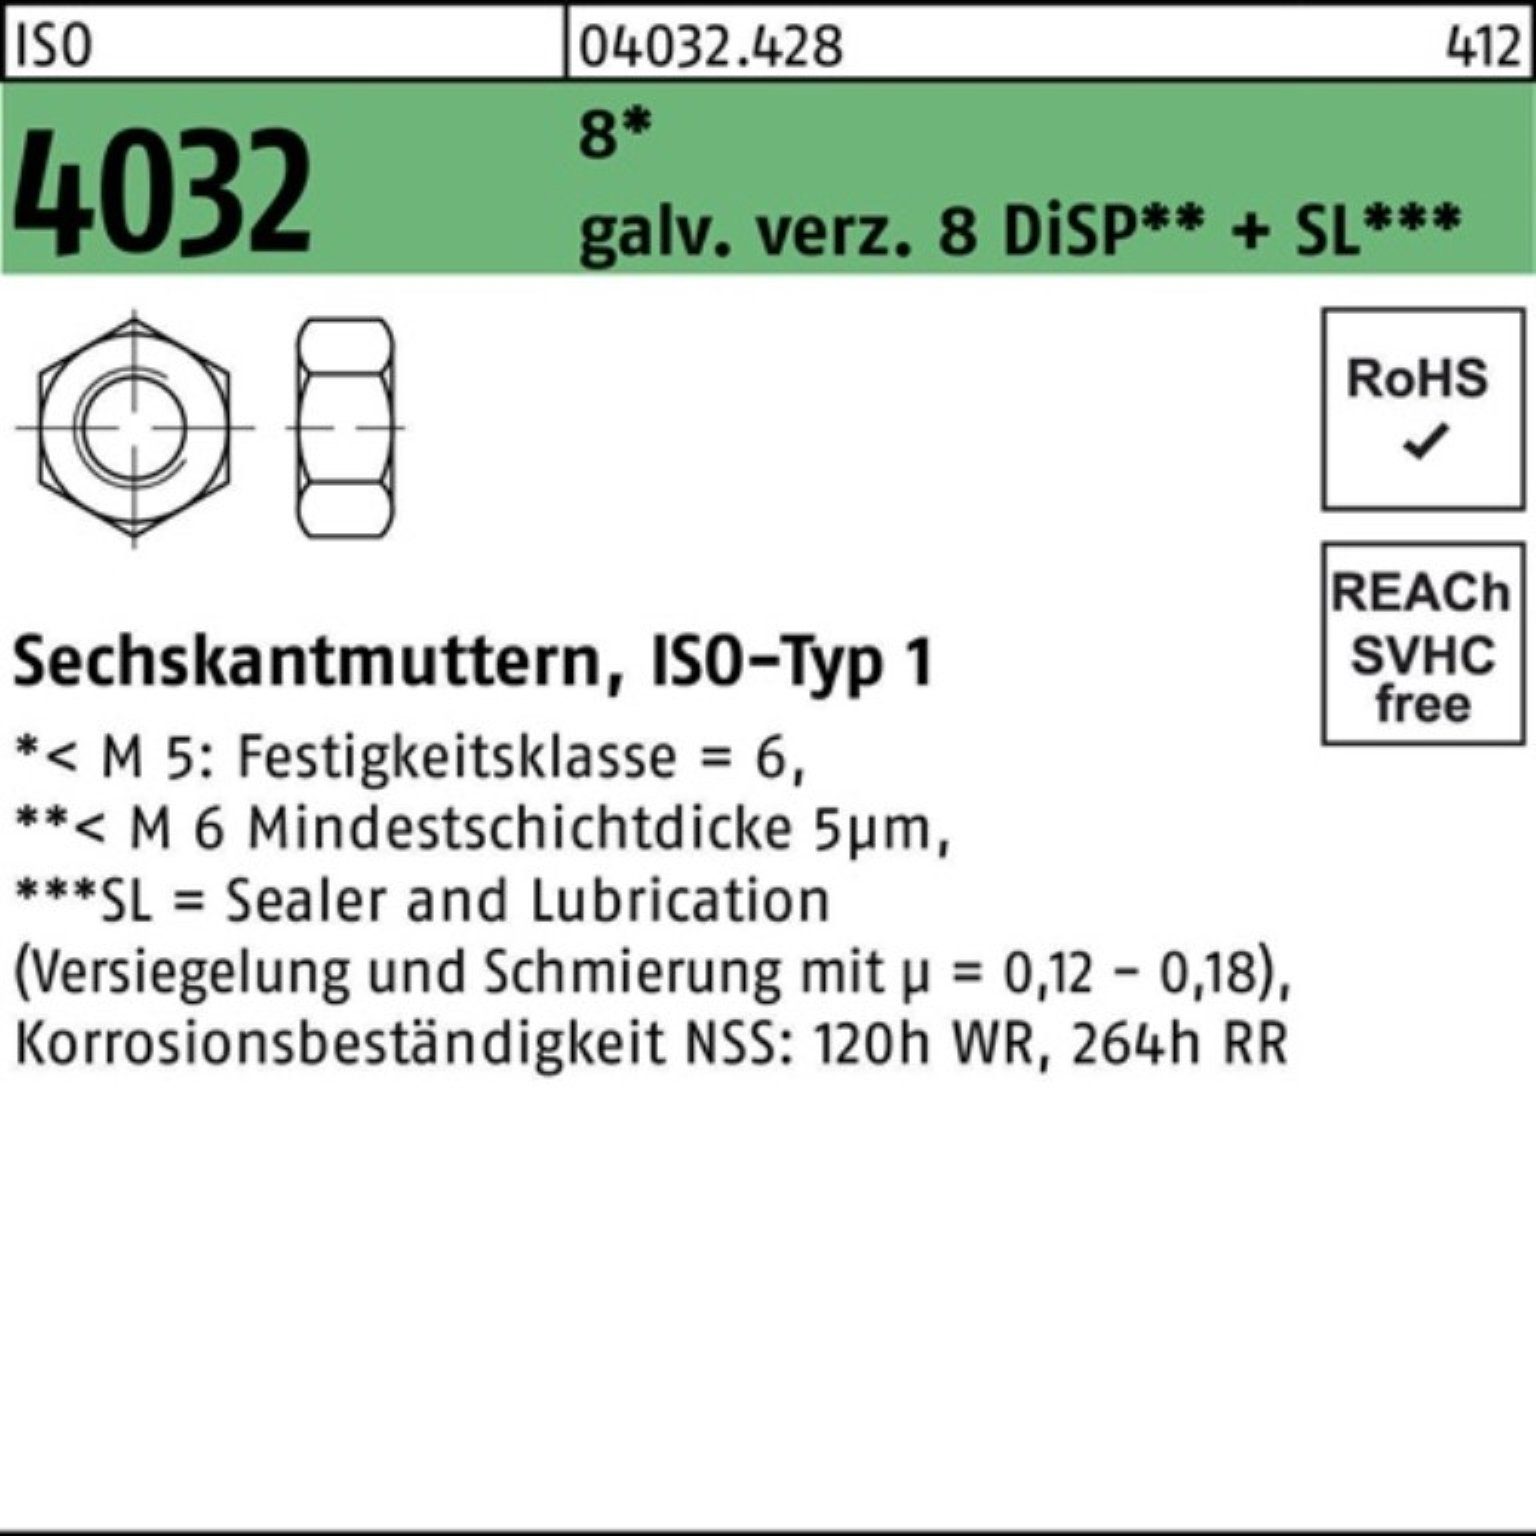 4032 1000er 8 Bufab + 8 Sechskantmutter galv.verz. Muttern DiSP Pack 1000 M5 ISO SL